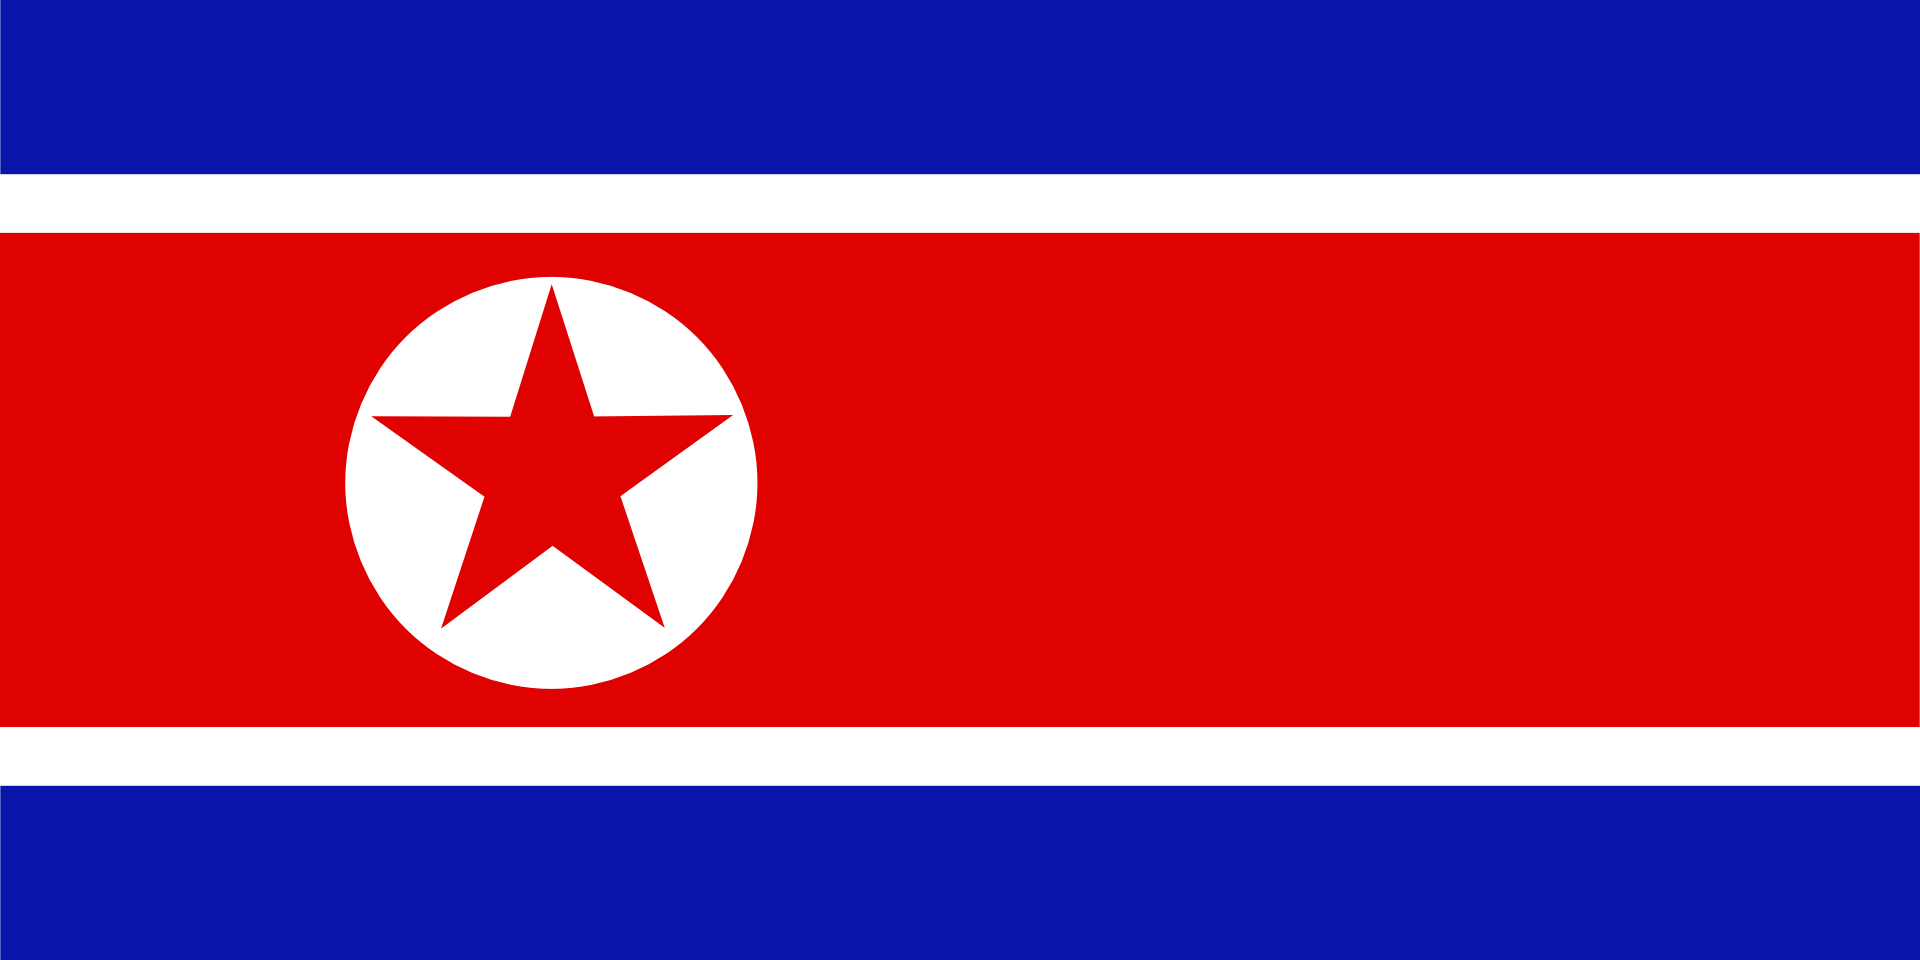 Pixabay stock image of the North Korean flag